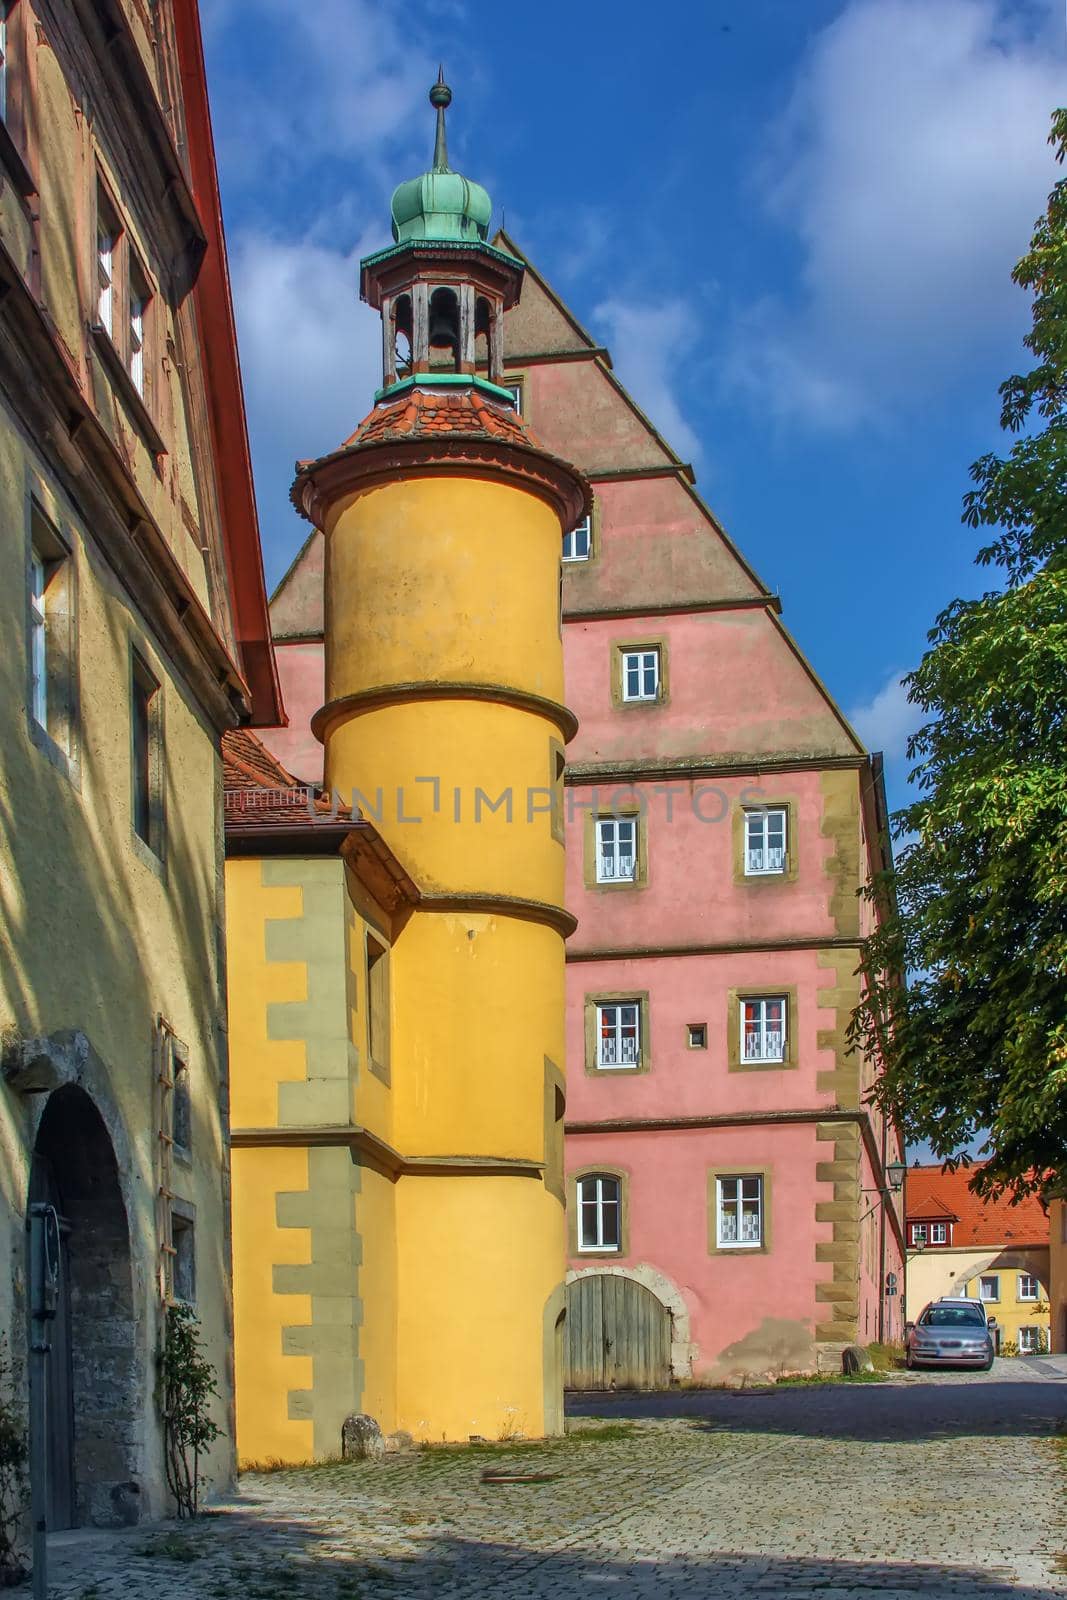 Tower of Hegereiterhaus (Treasury house) in Rothenburg ob der Tauber, Germany